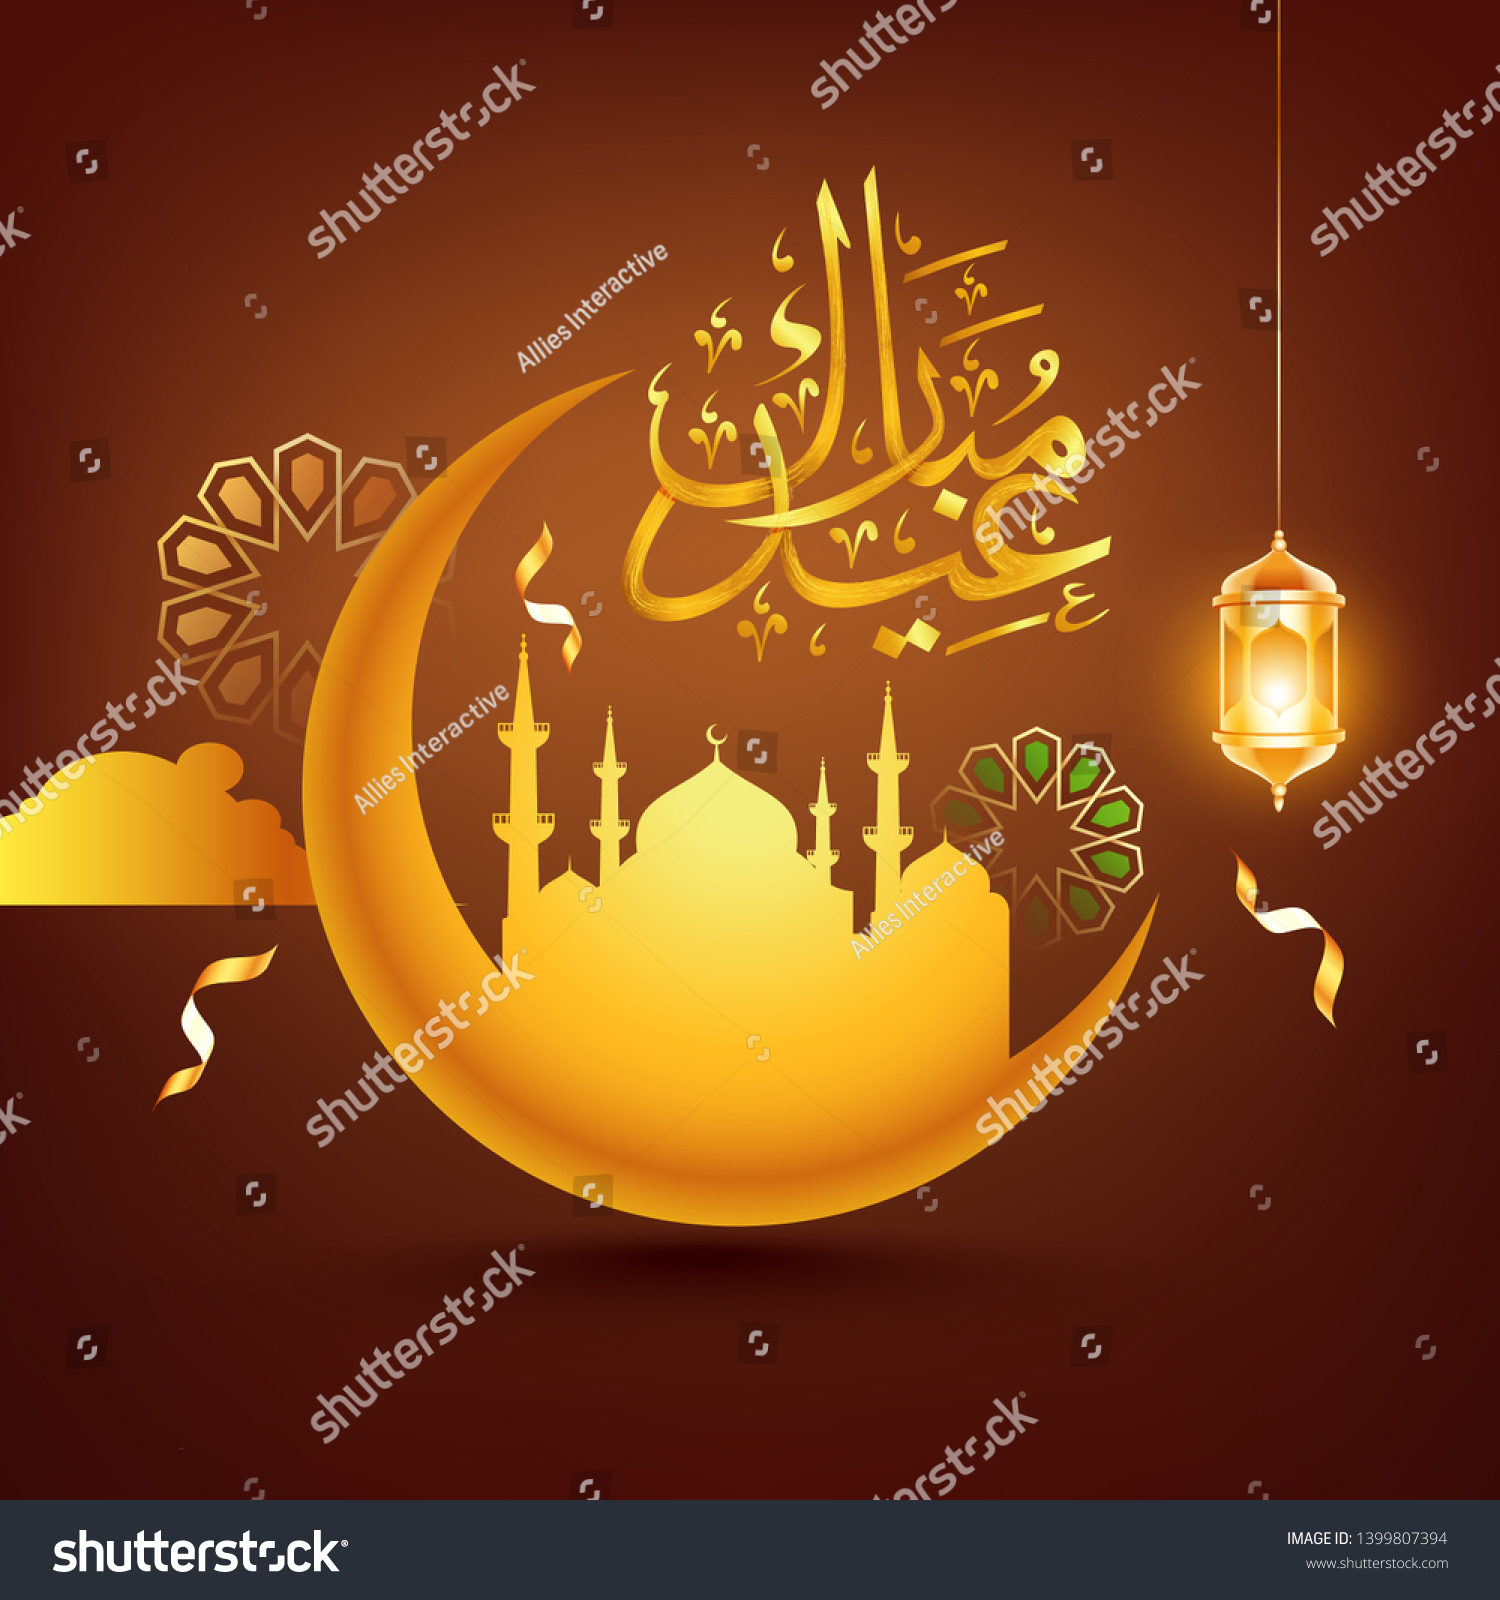 Creative Eid Mubarak Poster Banner Design Stock Vector Royalty Free 1399807394